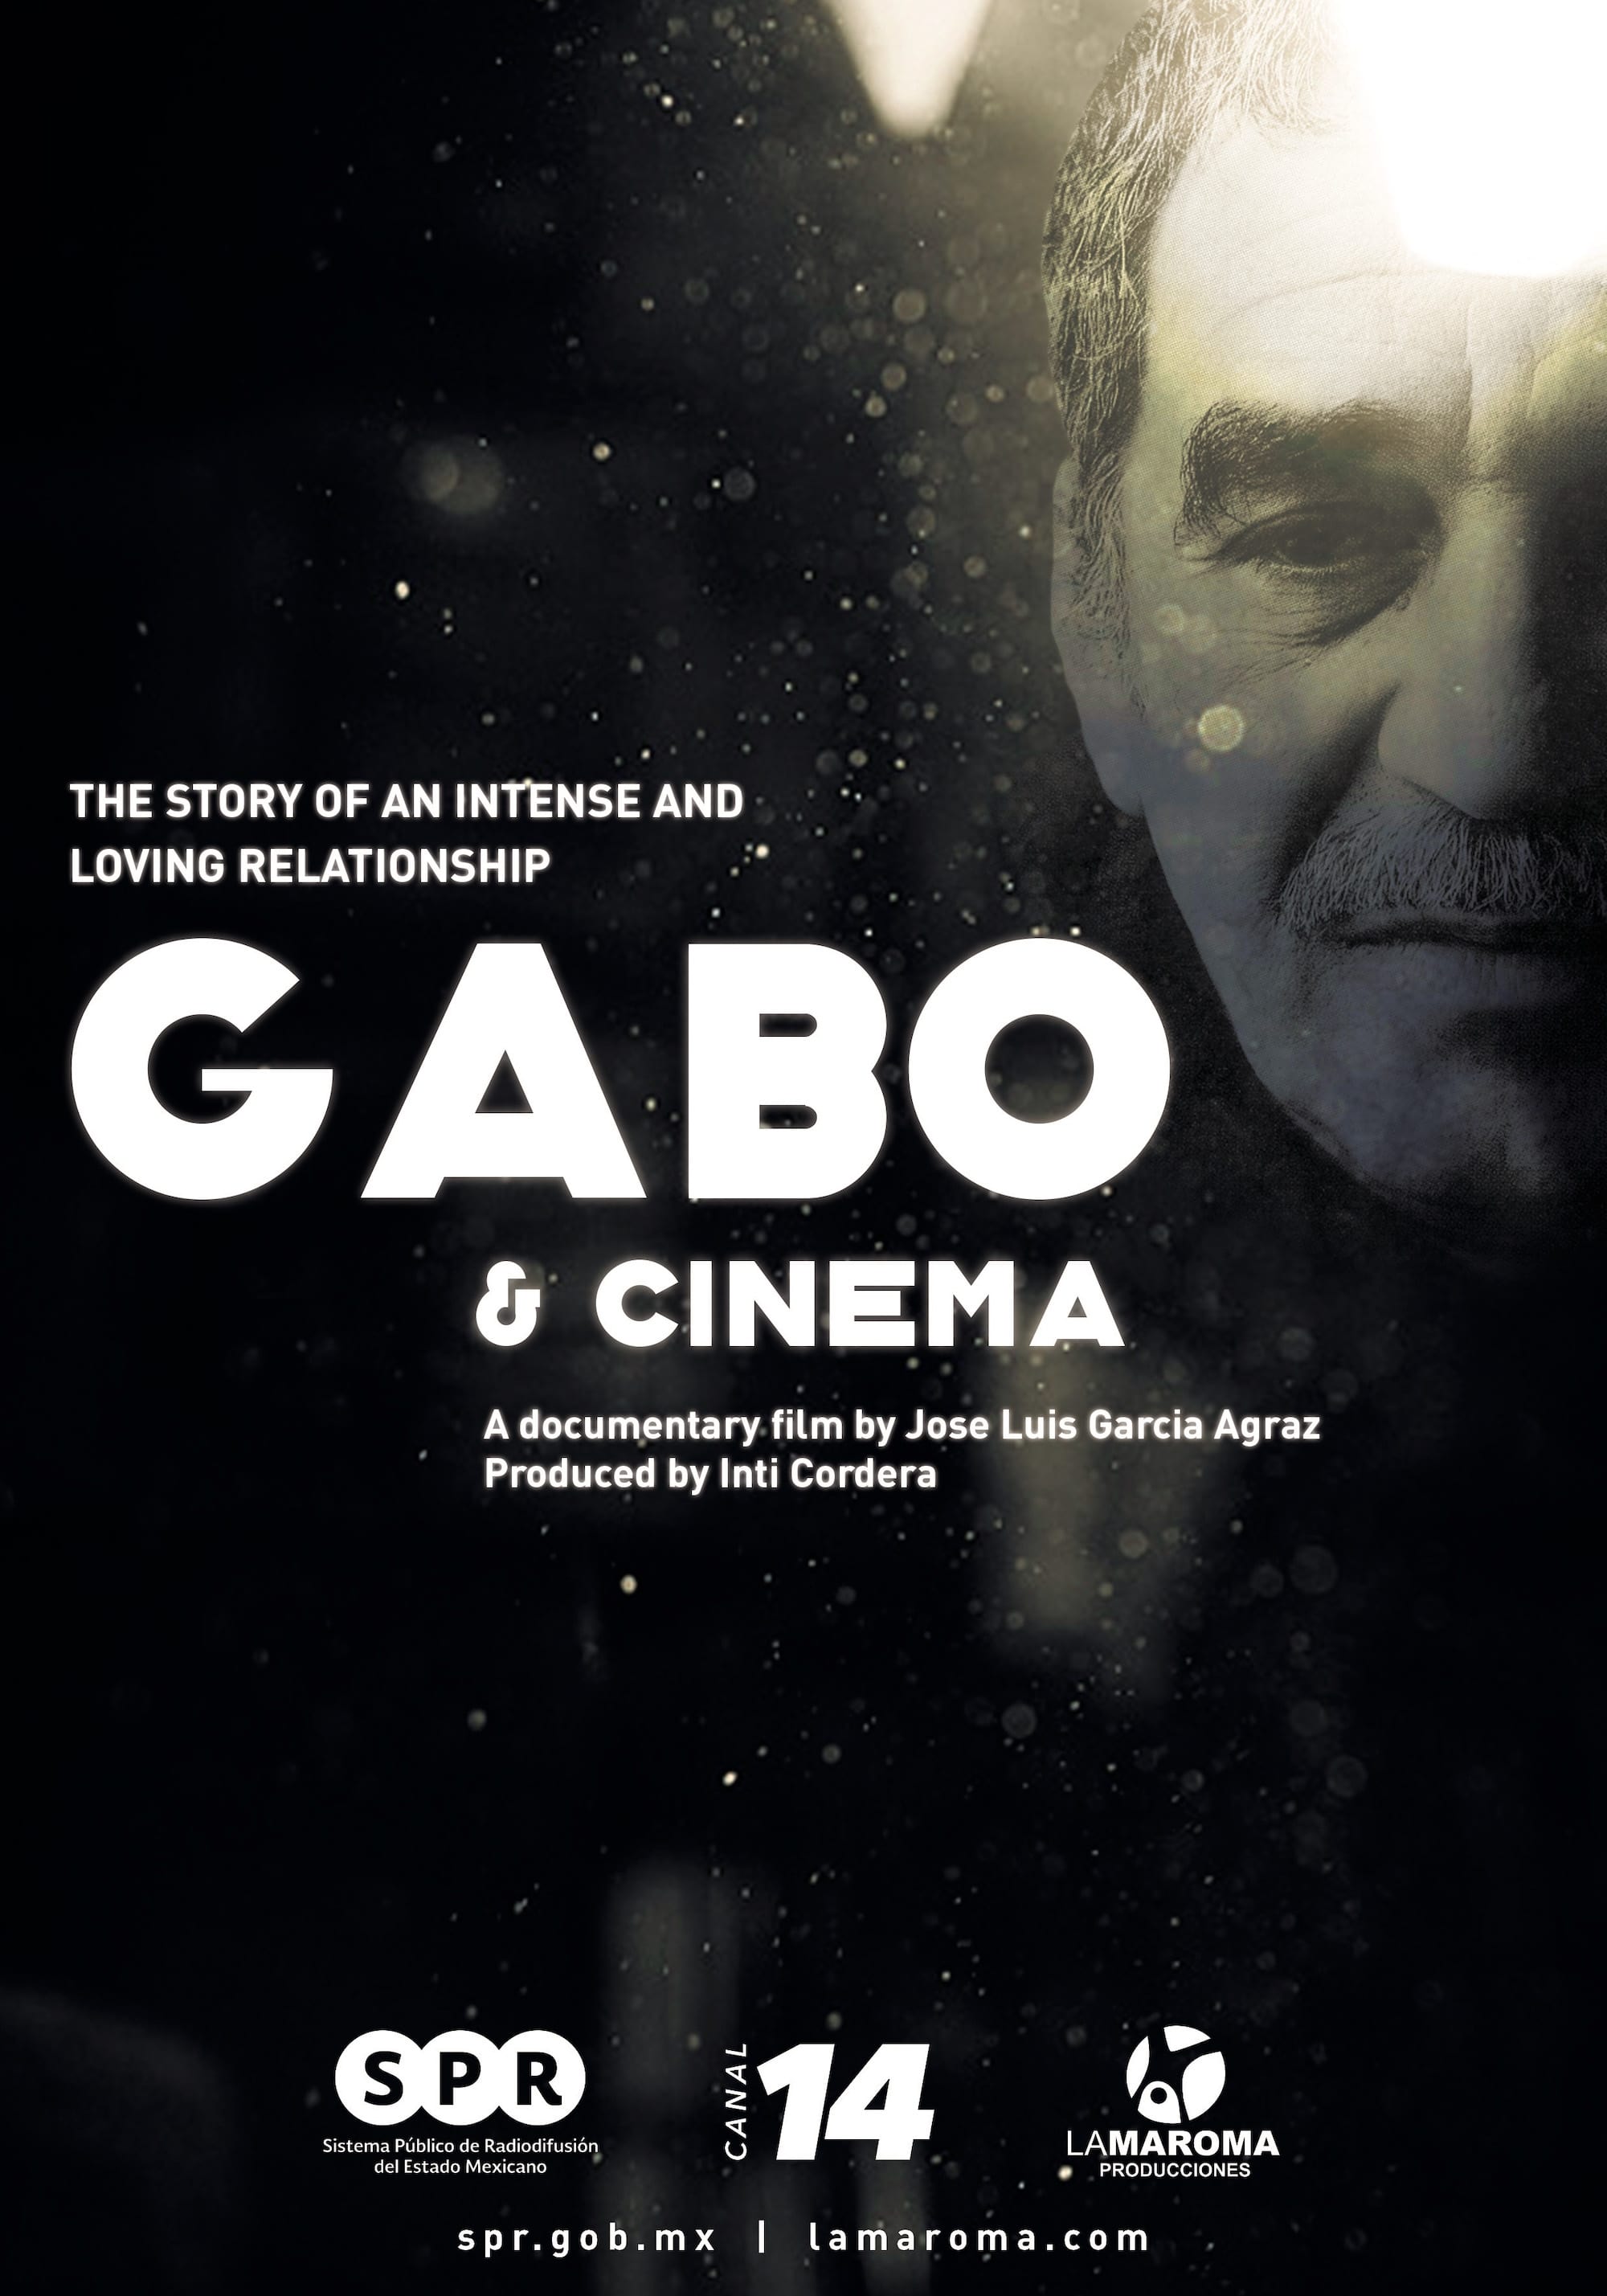 Gabo & Cinema